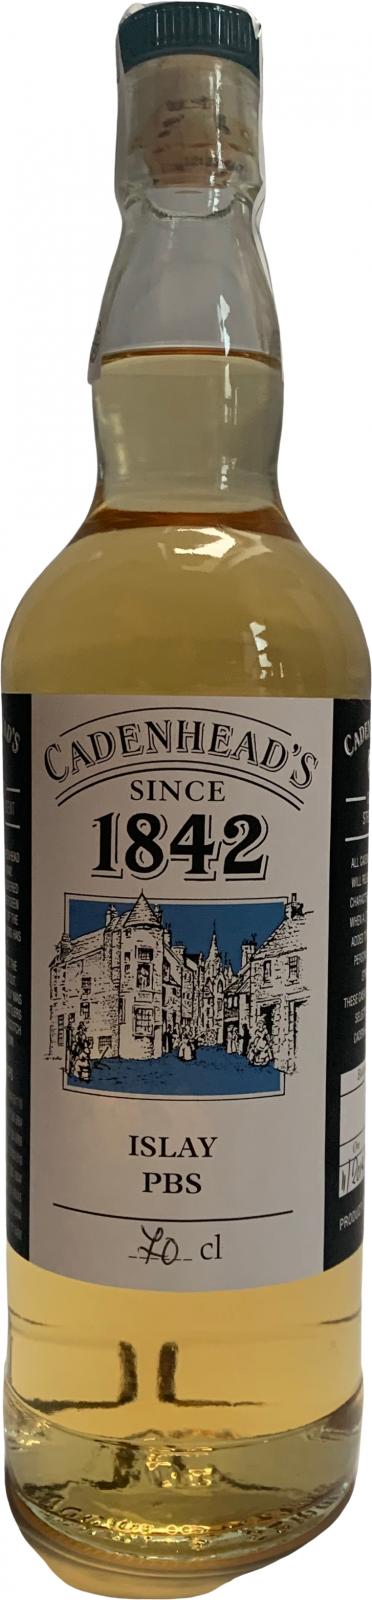 Islay PBS Cadenhead's 1842 CA Islay Malt Cadenhead Cologne Bottling 59.4% 700ml